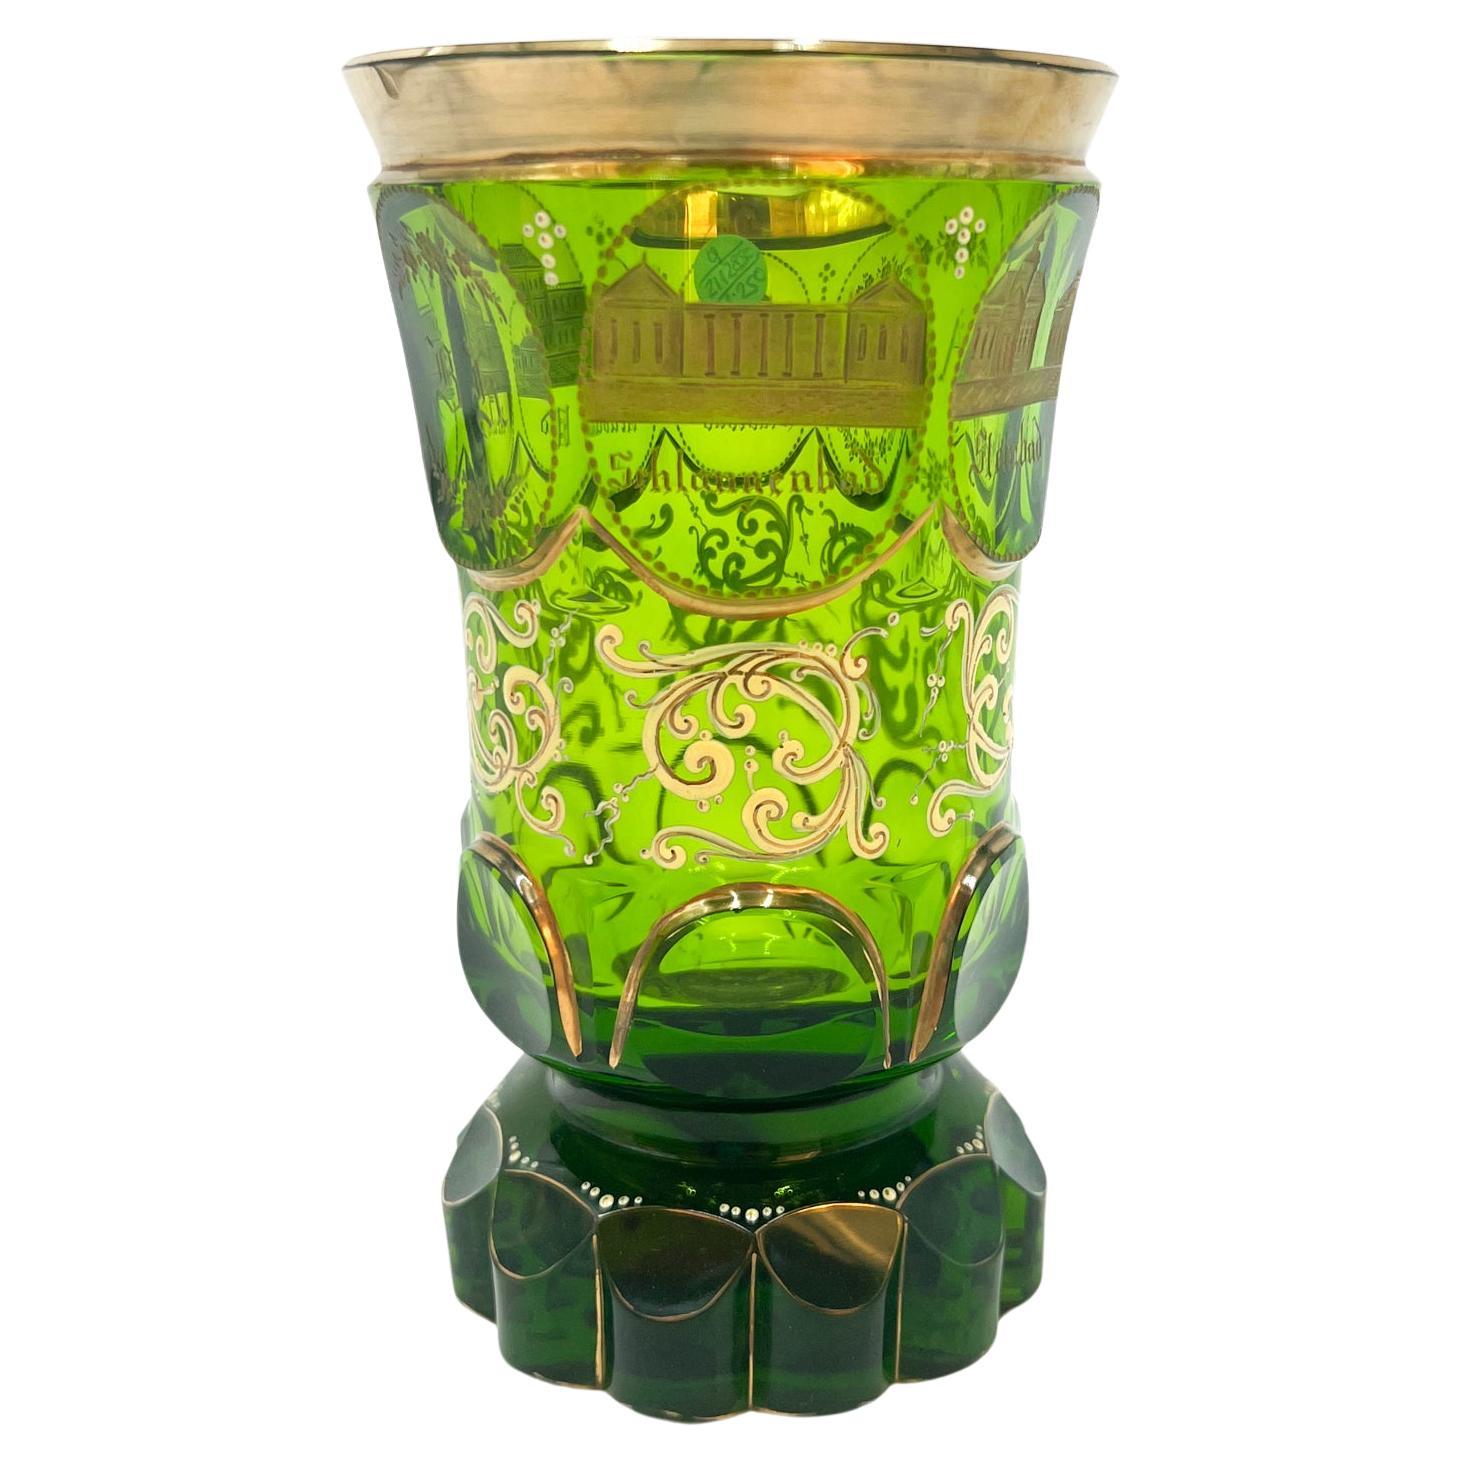 Green Biedermeier Crystal Glass from the 1800s